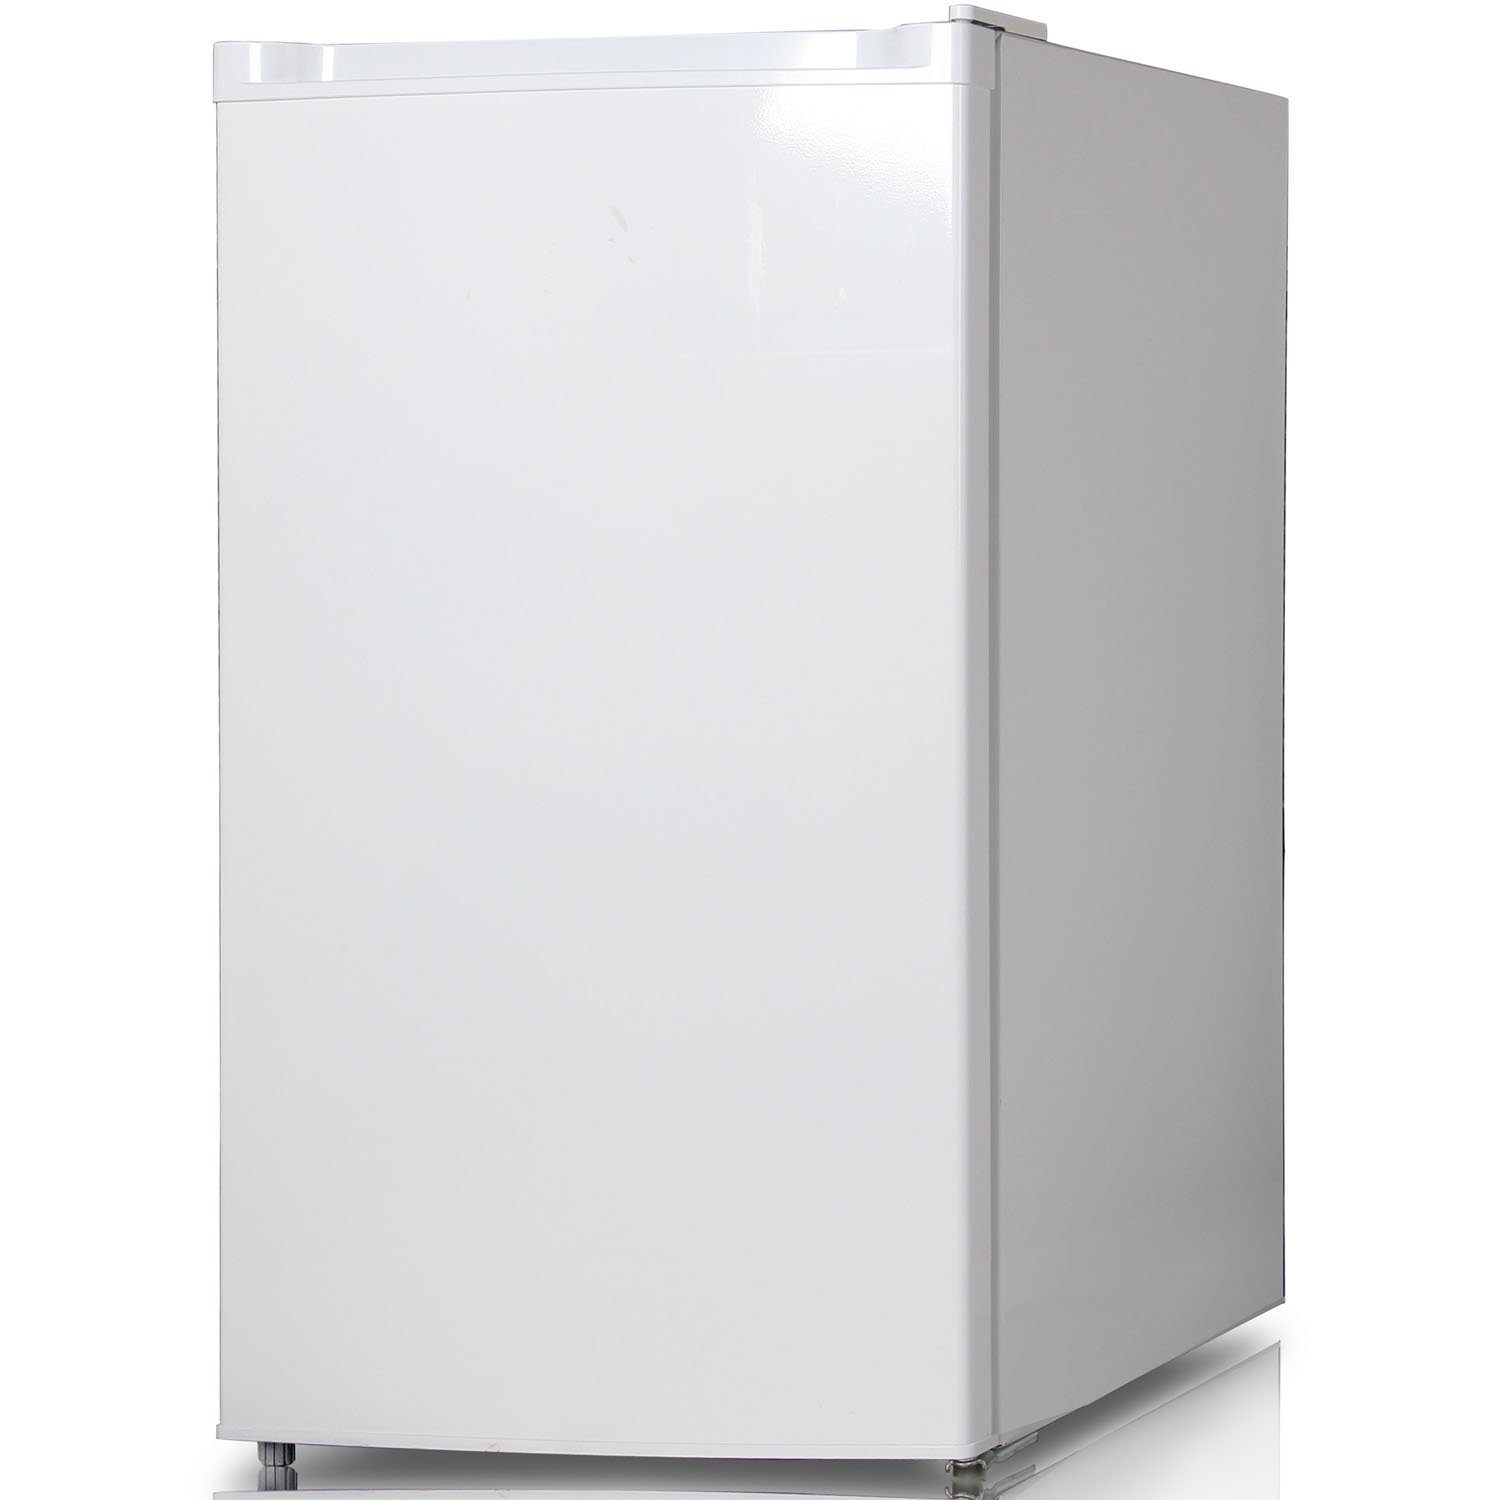 Single Door Refrigerator Image